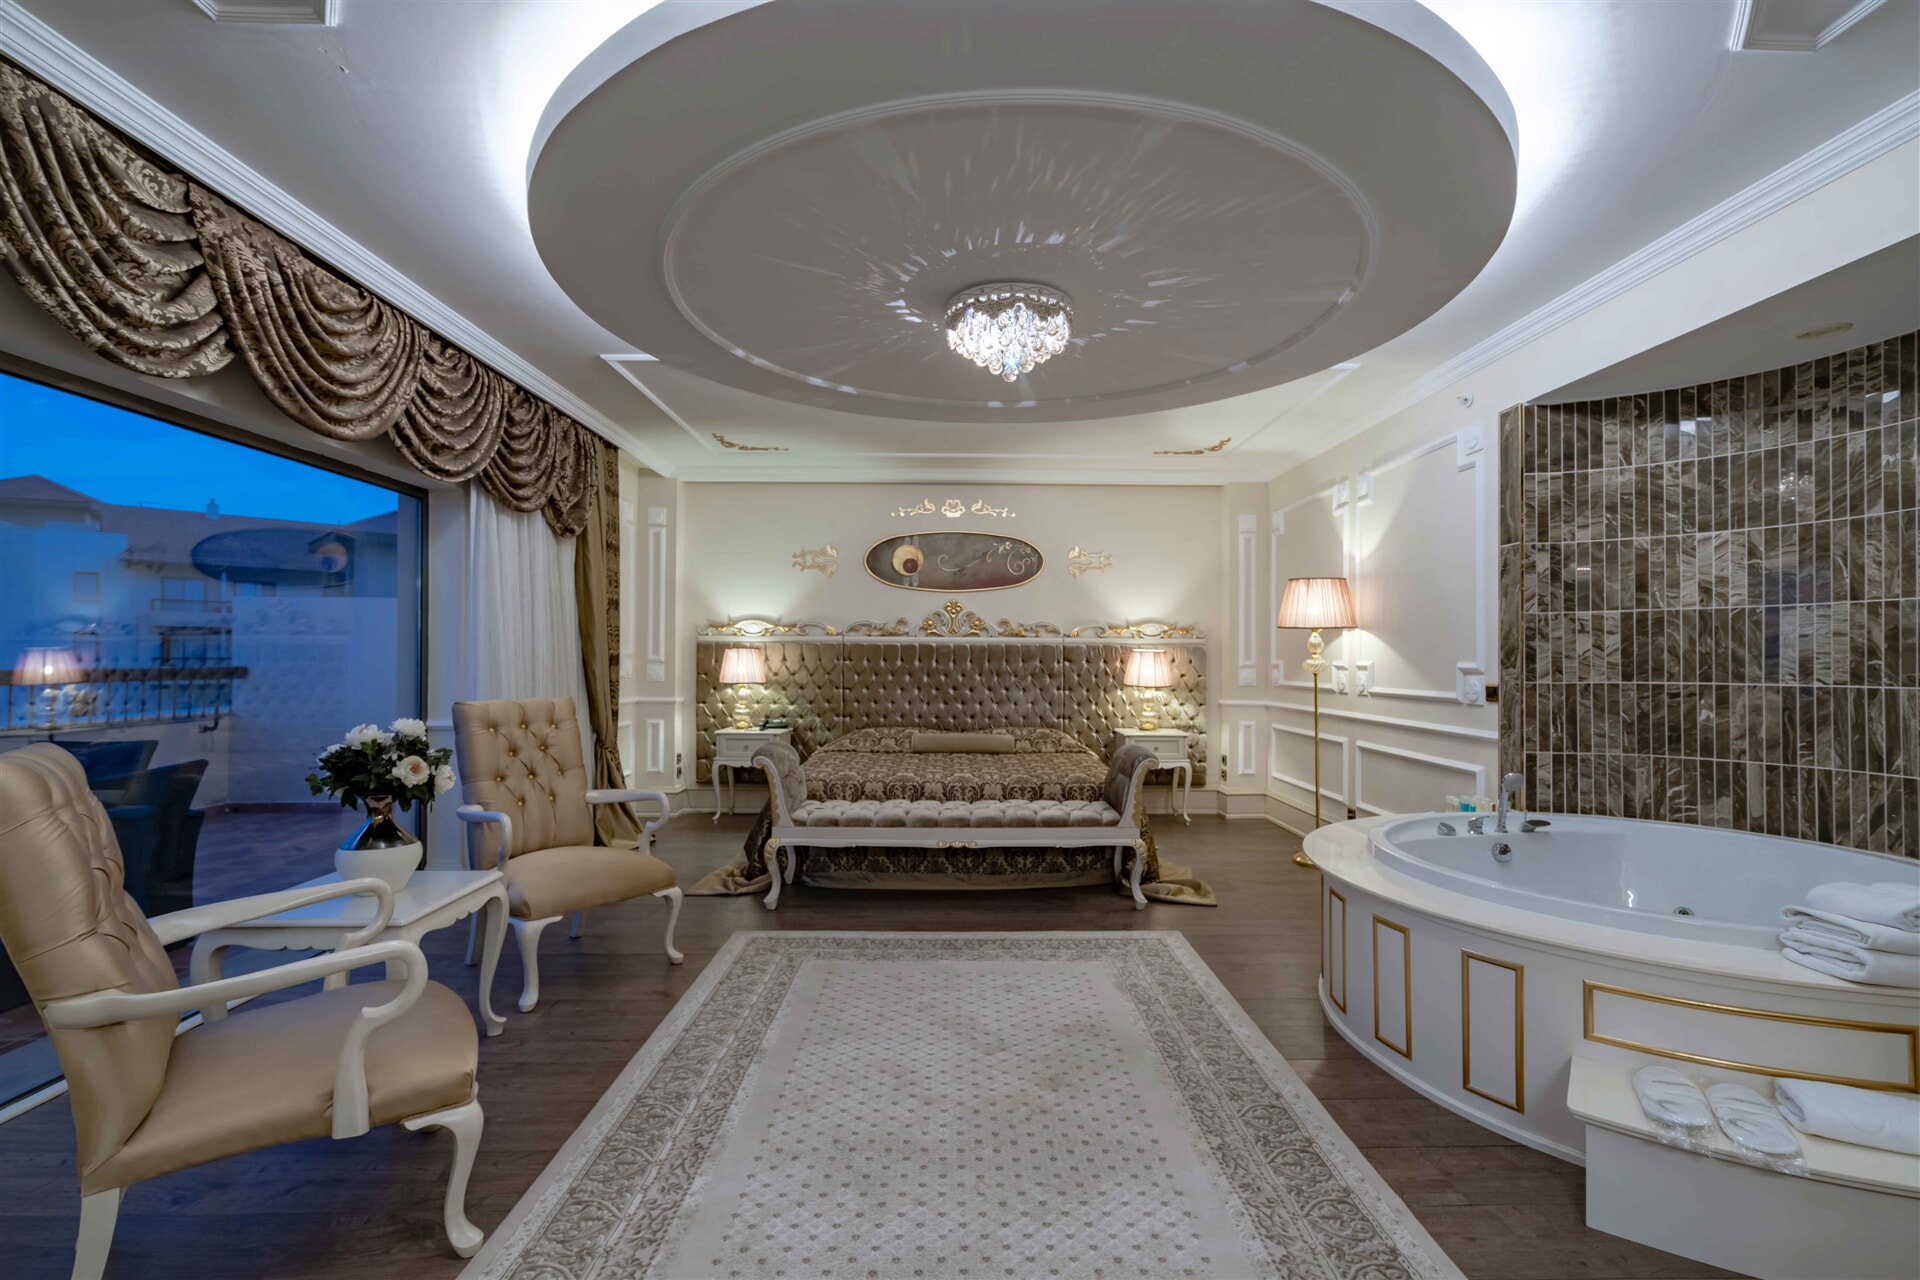 EUPHORIA AEGEAN RESORT AND THERMAL HOTEL – Executive Room